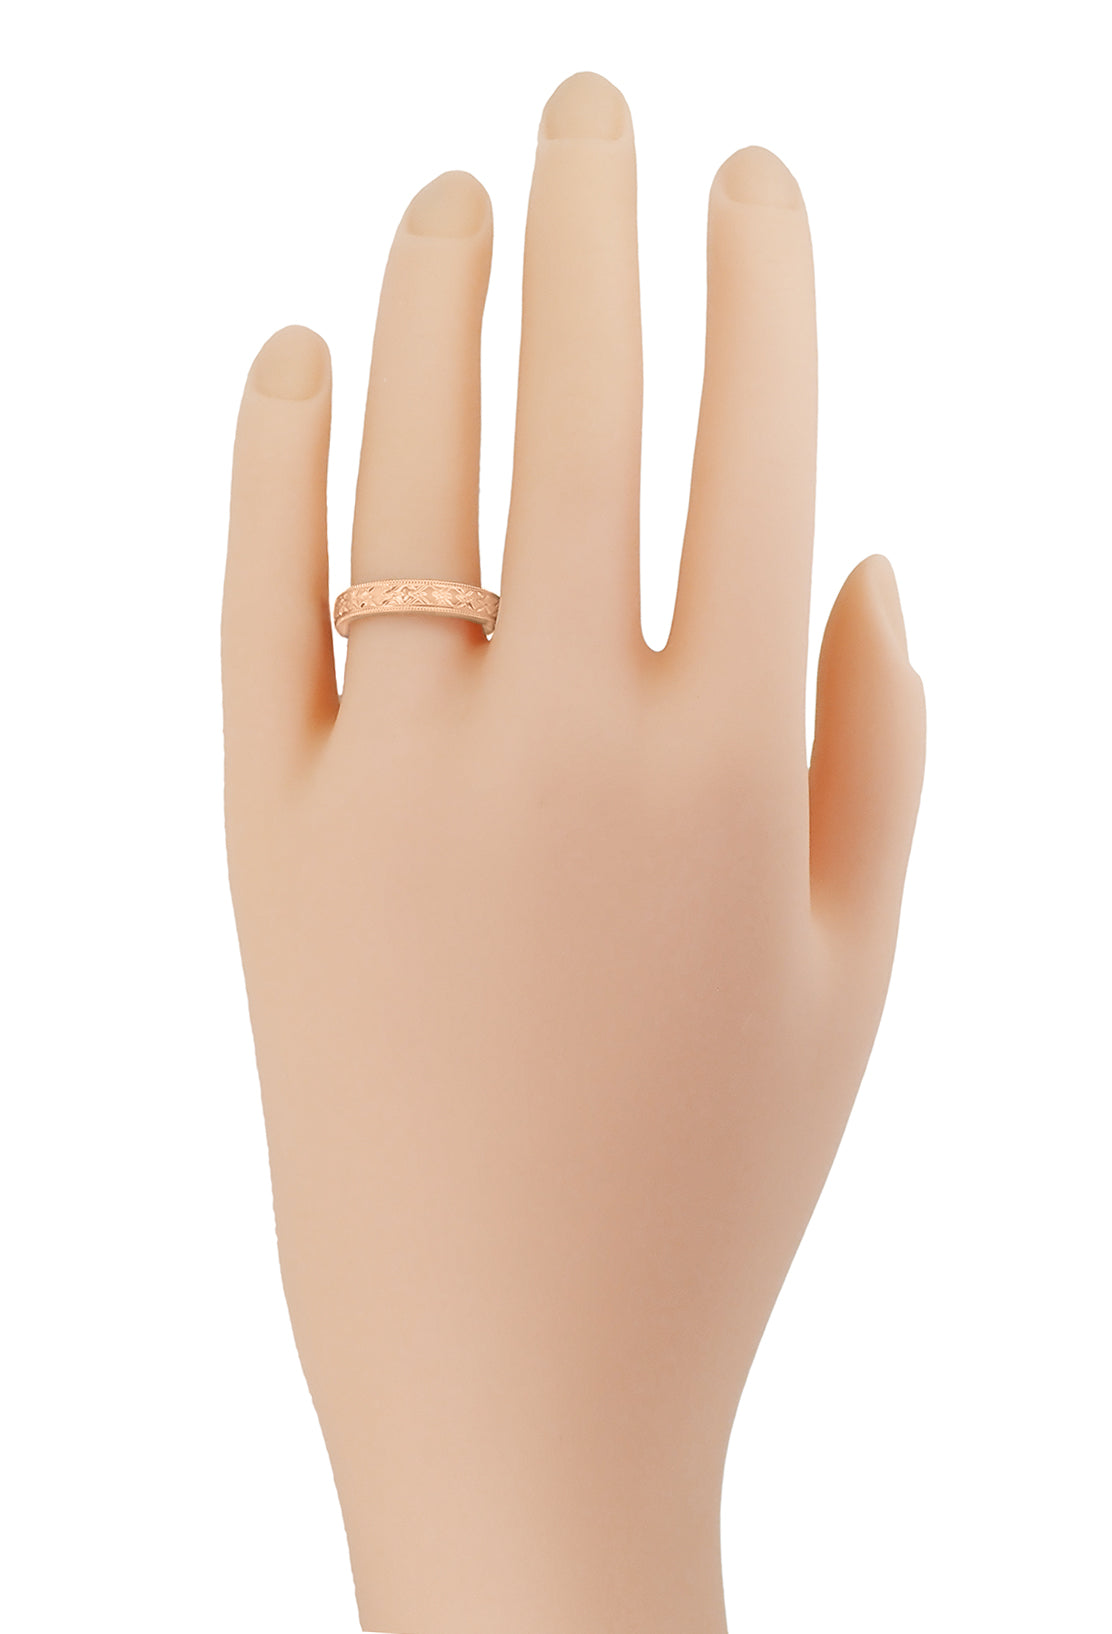 R803R Mid Century Modern Rose Gold Wedding Ring on A Ladies Hand